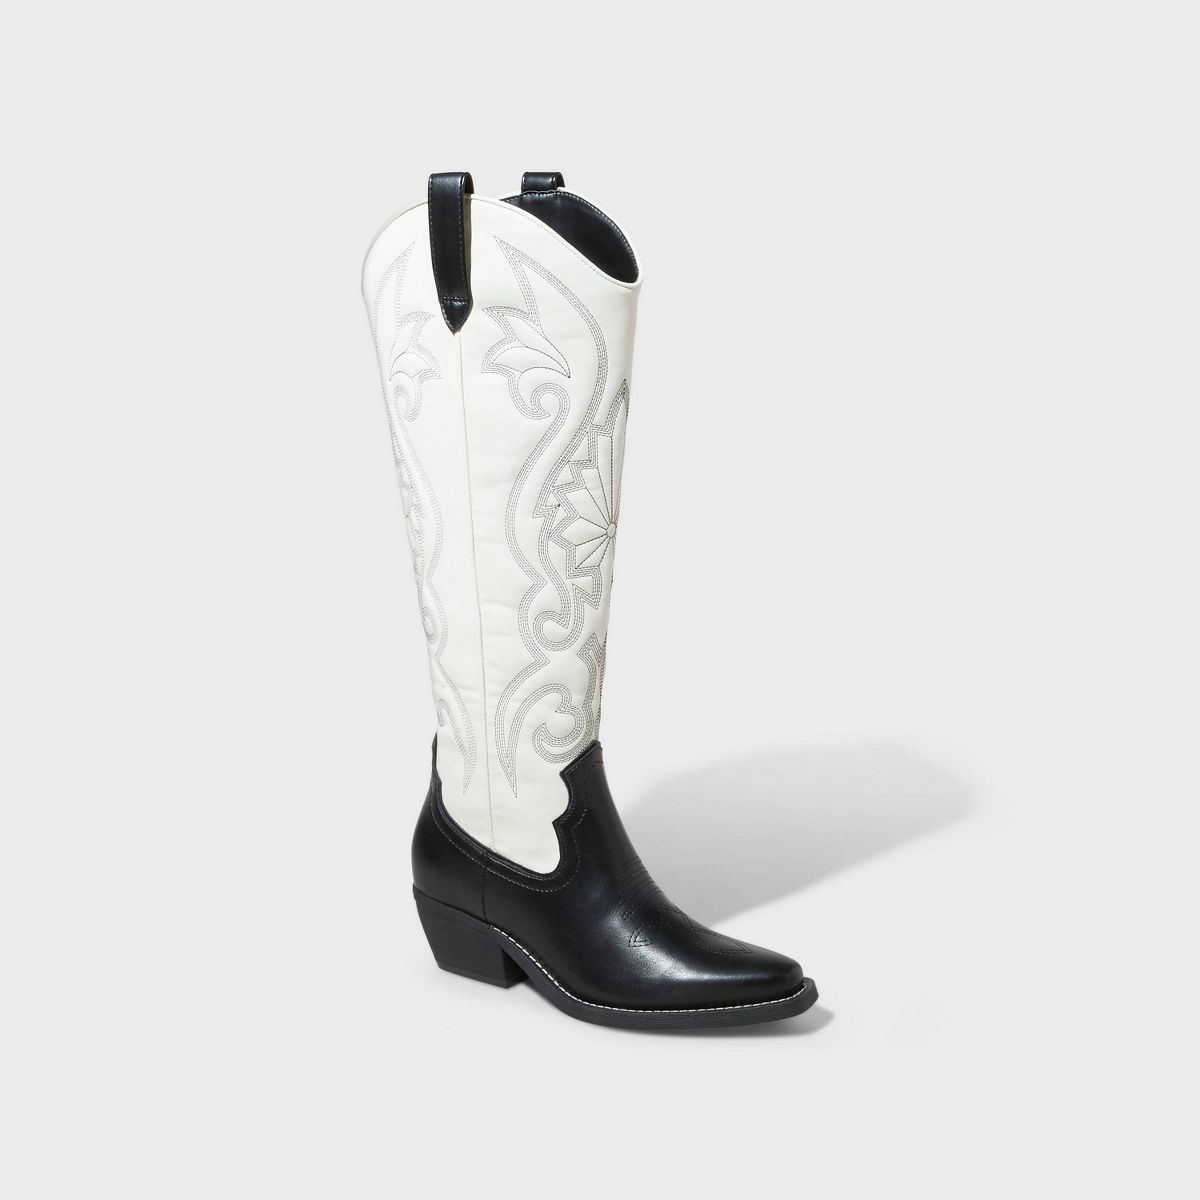 Women's Kenzi Tall Western Dress Boots with Memory Foam Insole - Wild Fable™ Black 6 | Target